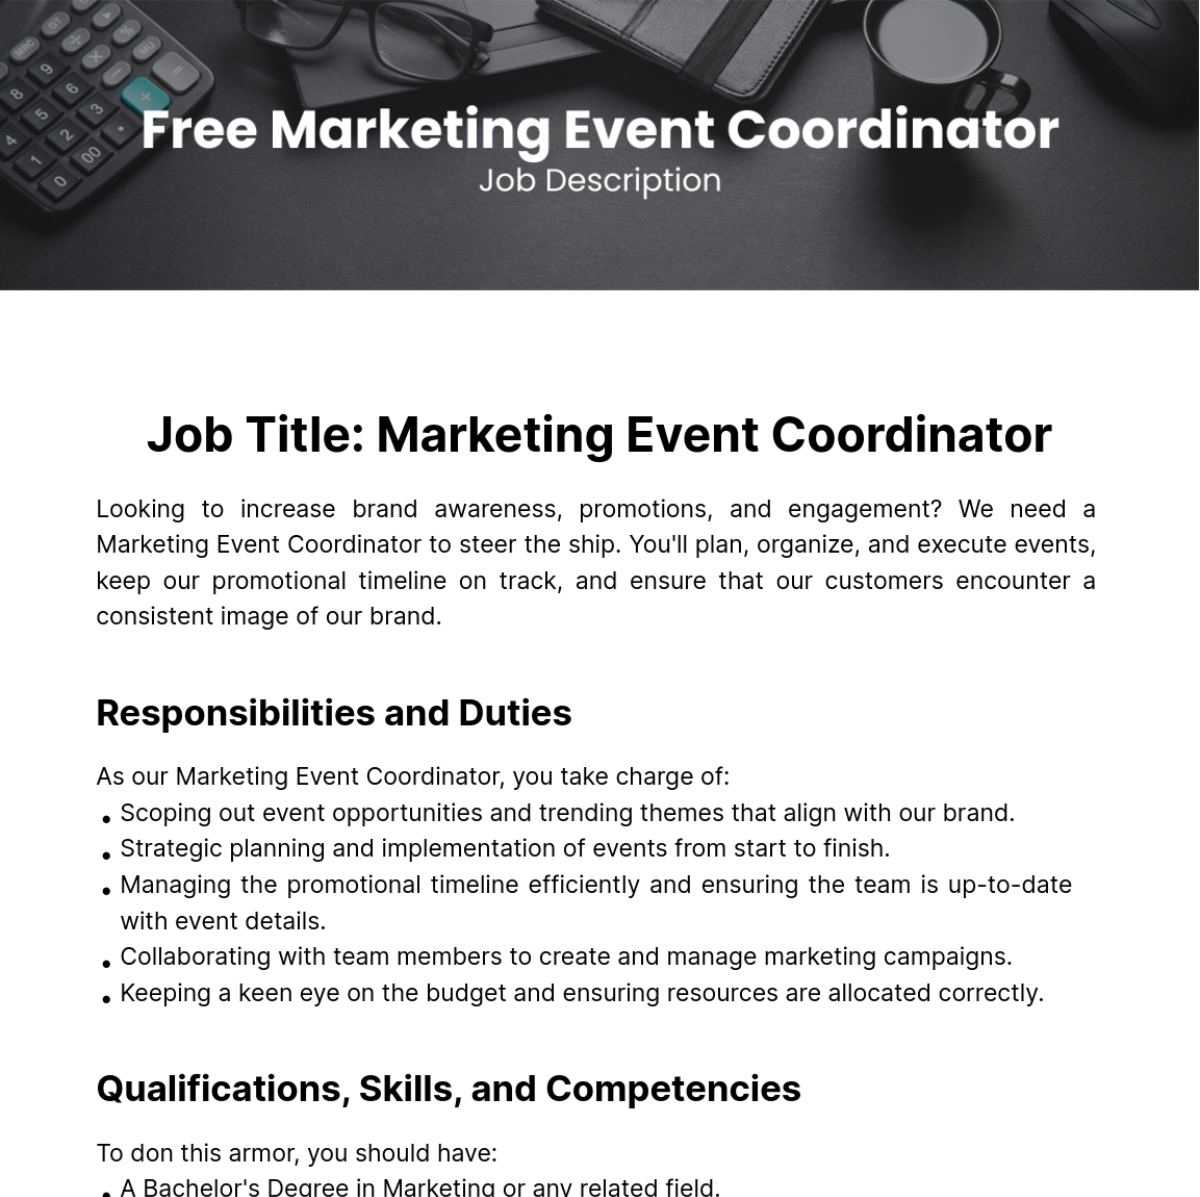 Free Marketing Event Coordinator Job Description Template